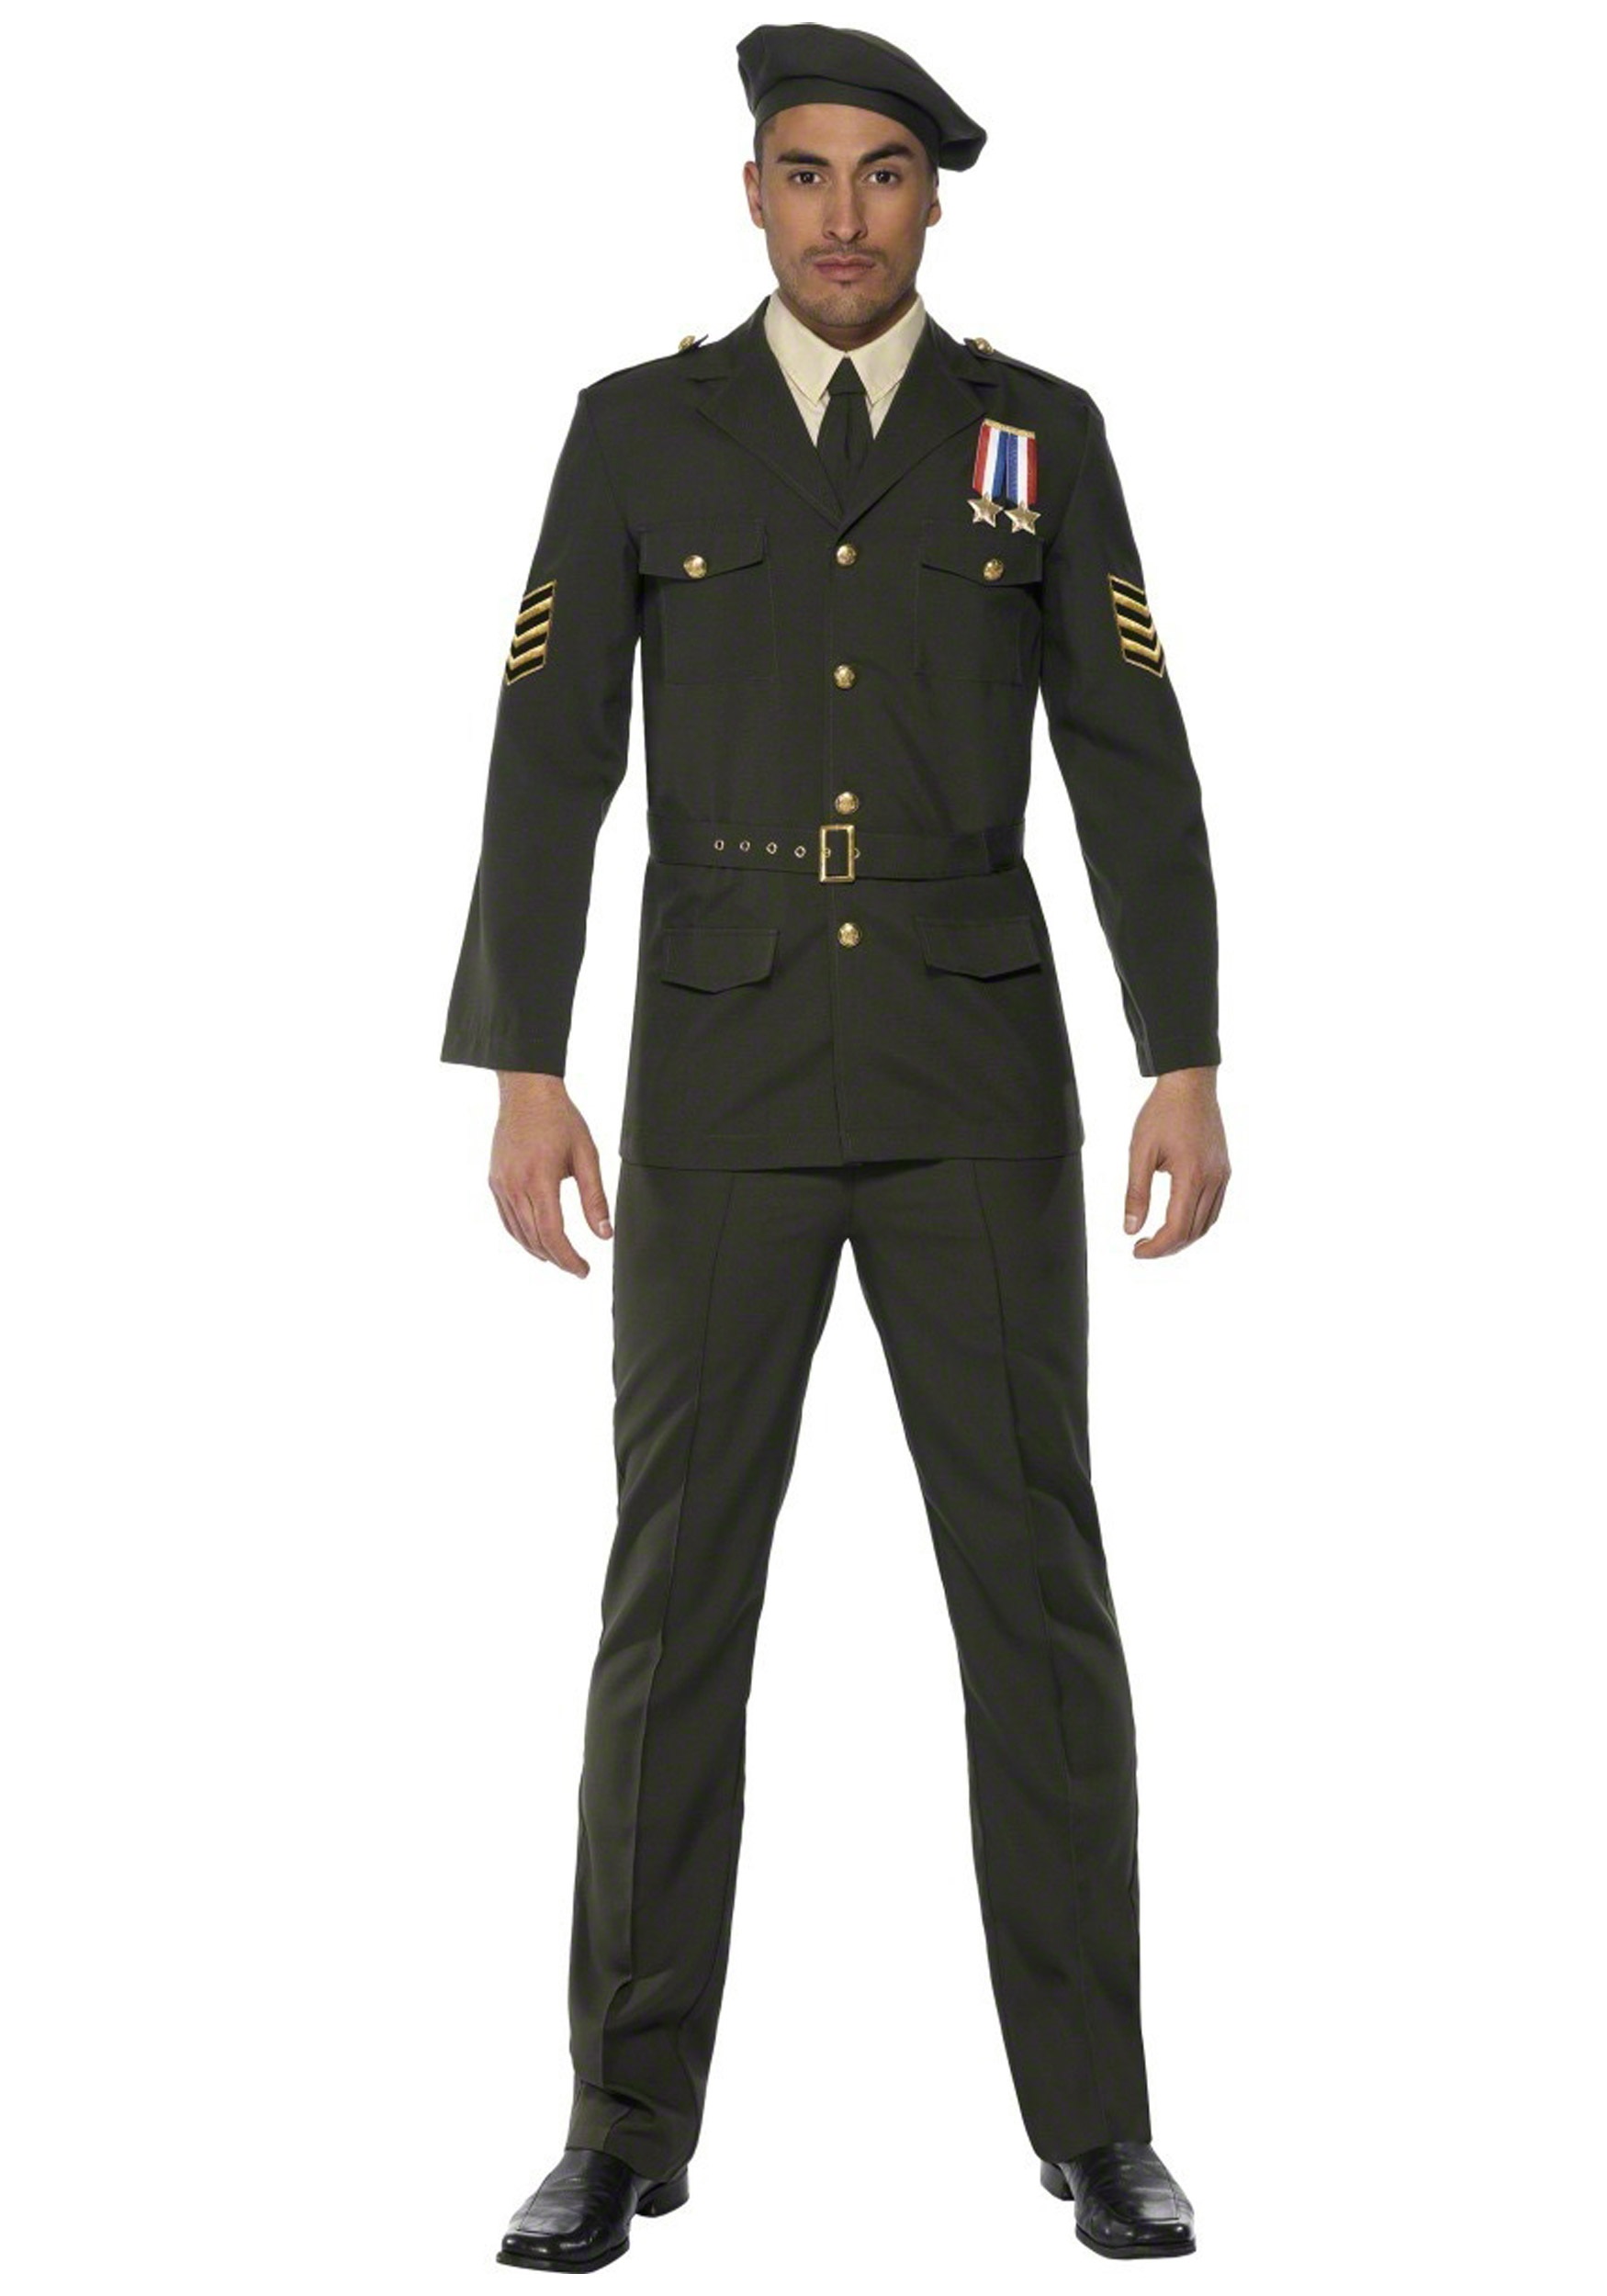 G78 Military FBI Army Soldier Uniform Fancy Dress Party Halloween Costume & Hat 